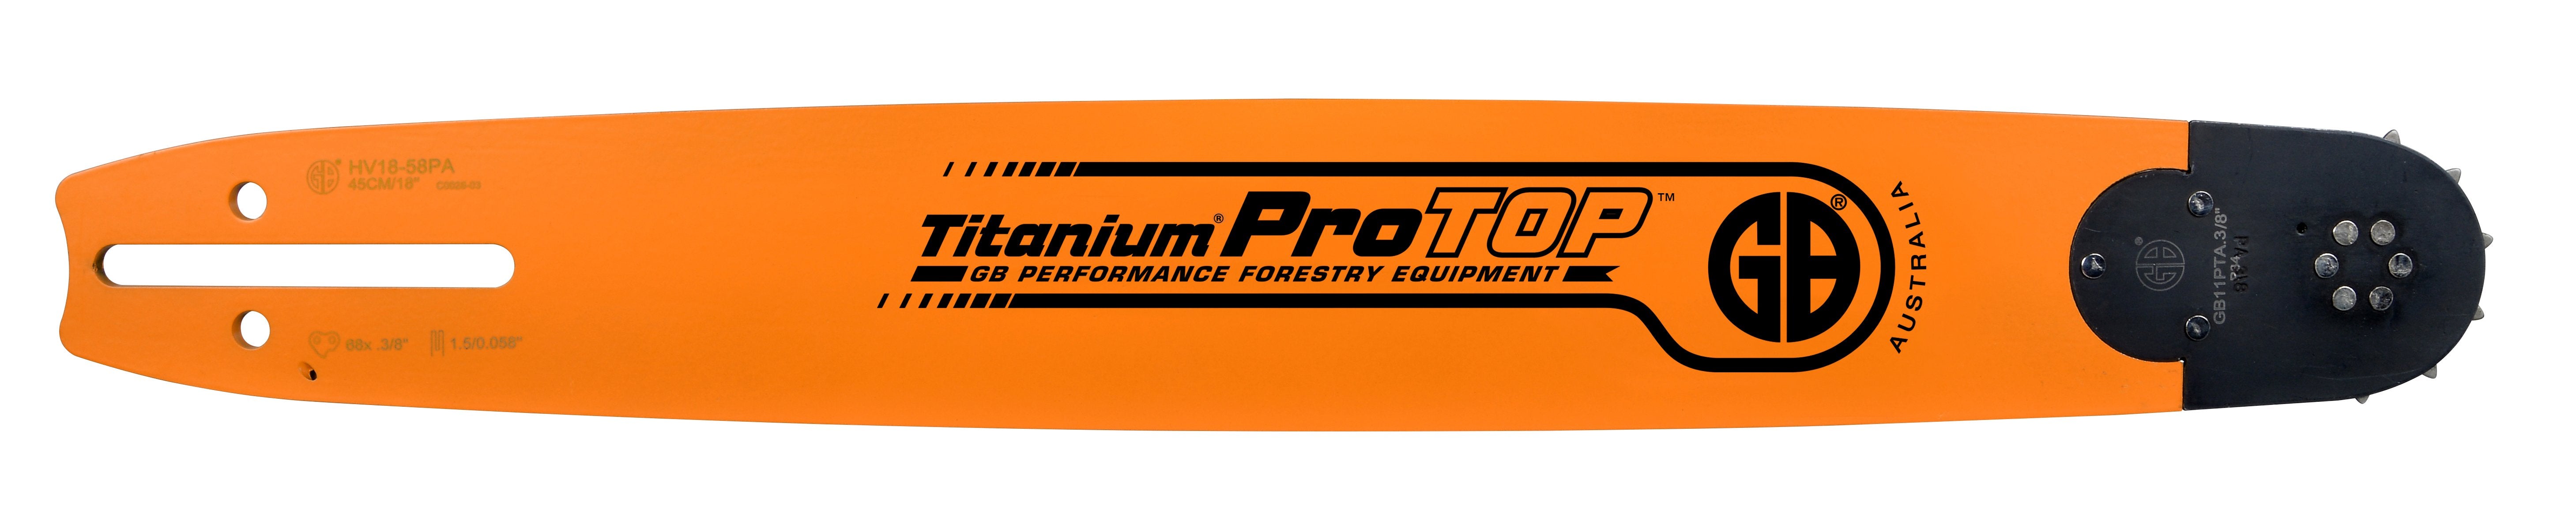 GB Titanium®ProTOP K095 Chainsaw Bar UHLX18-58PA